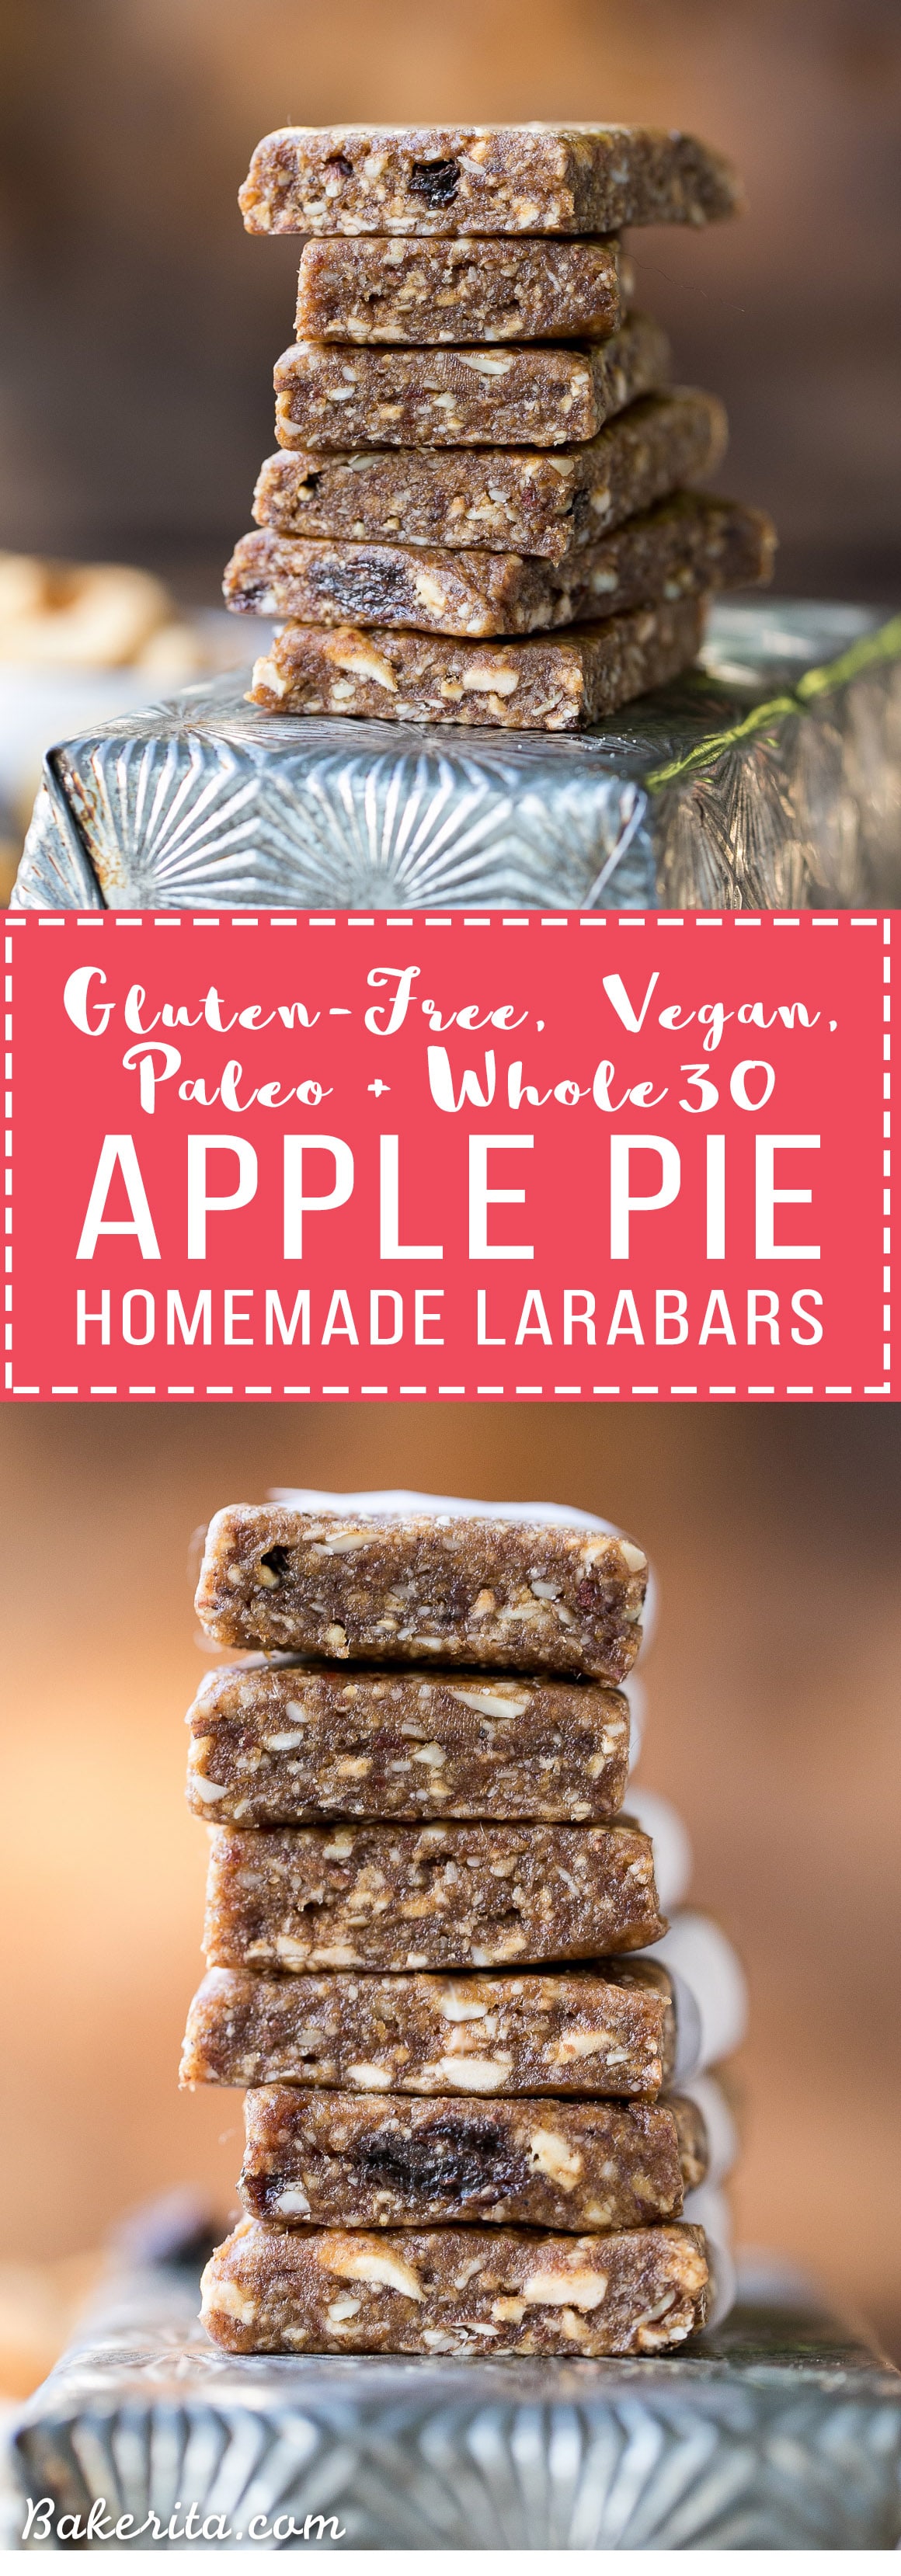 Homemade Apple Pie Larabars (Gluten